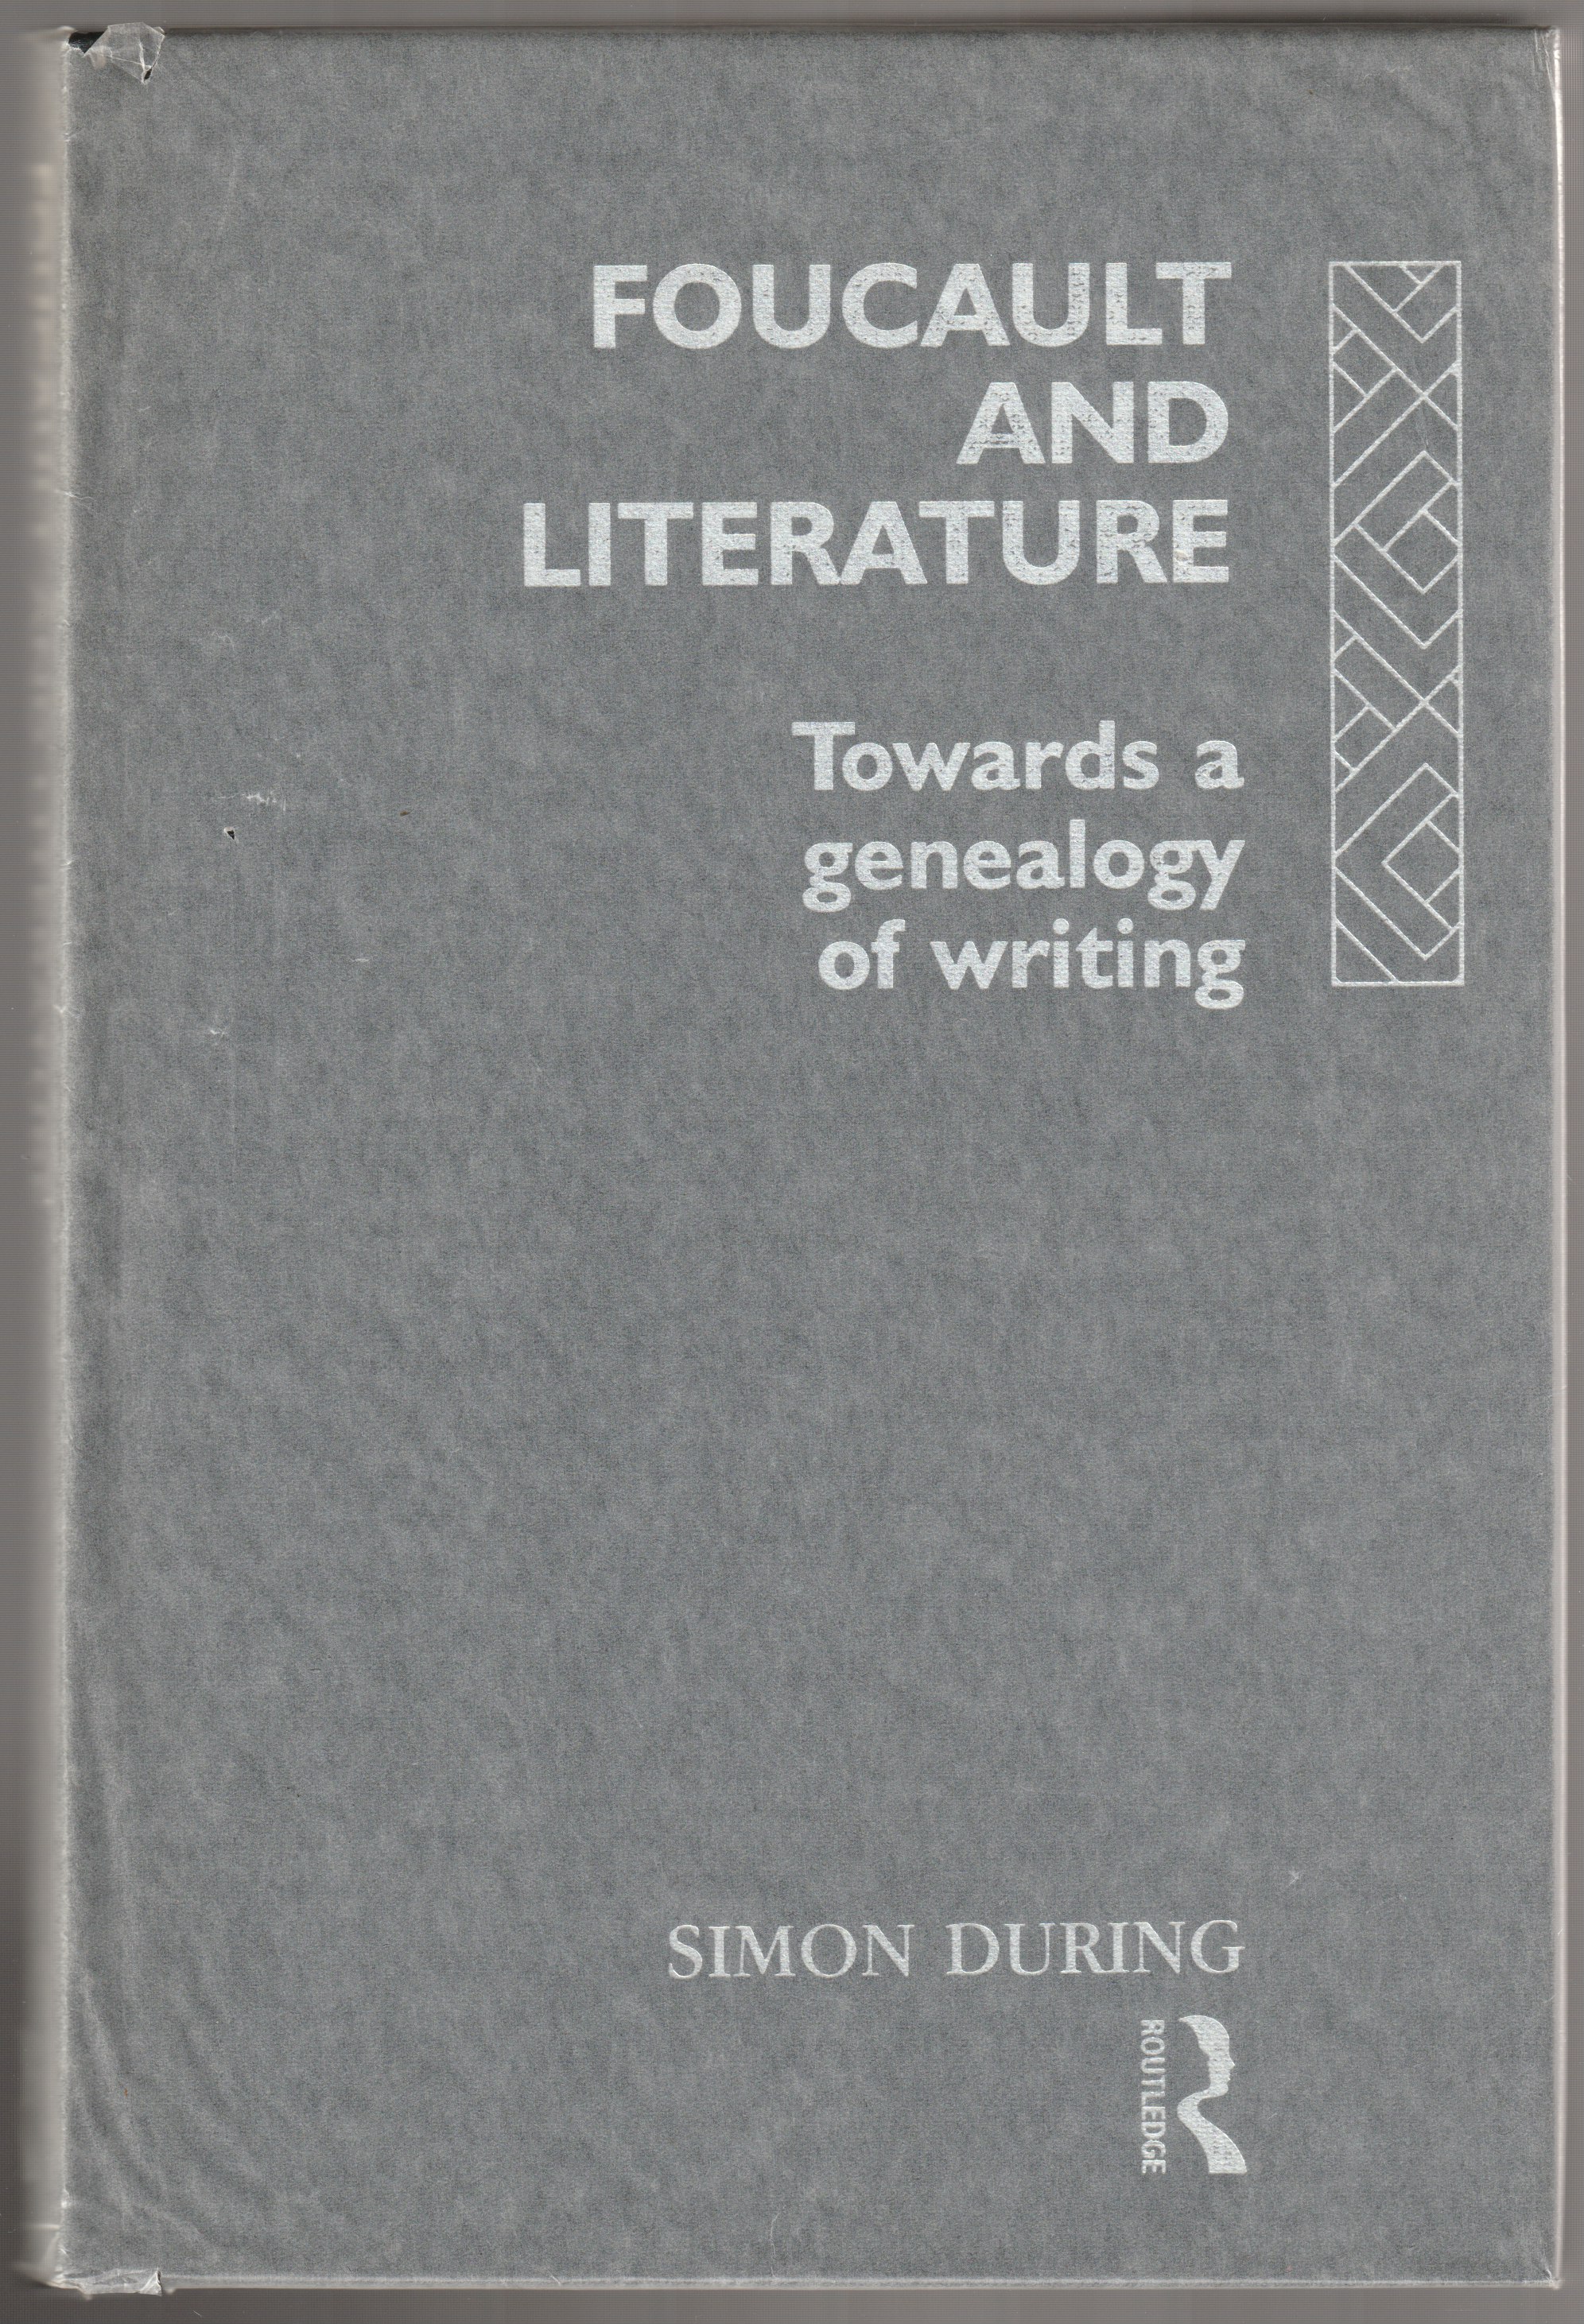 Foucault and literature : towards a genealogy of writing.